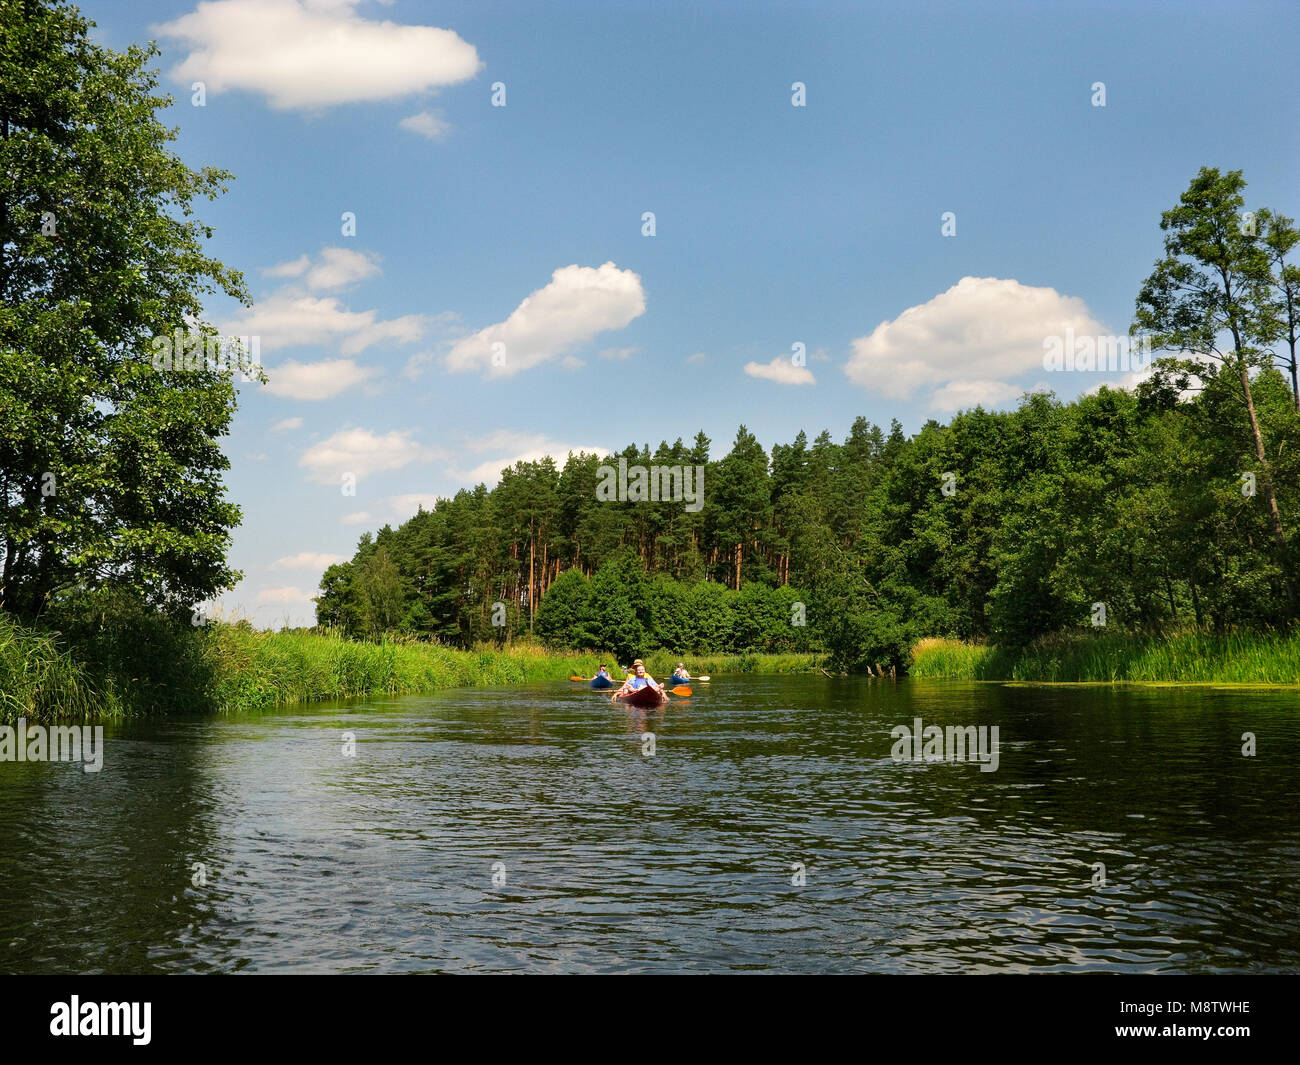 Auf dem canoe Trail Der Fluss Brda. Tuchola Kiefernwälder, Provinz Pommern, Polen, Europa. Stockfoto